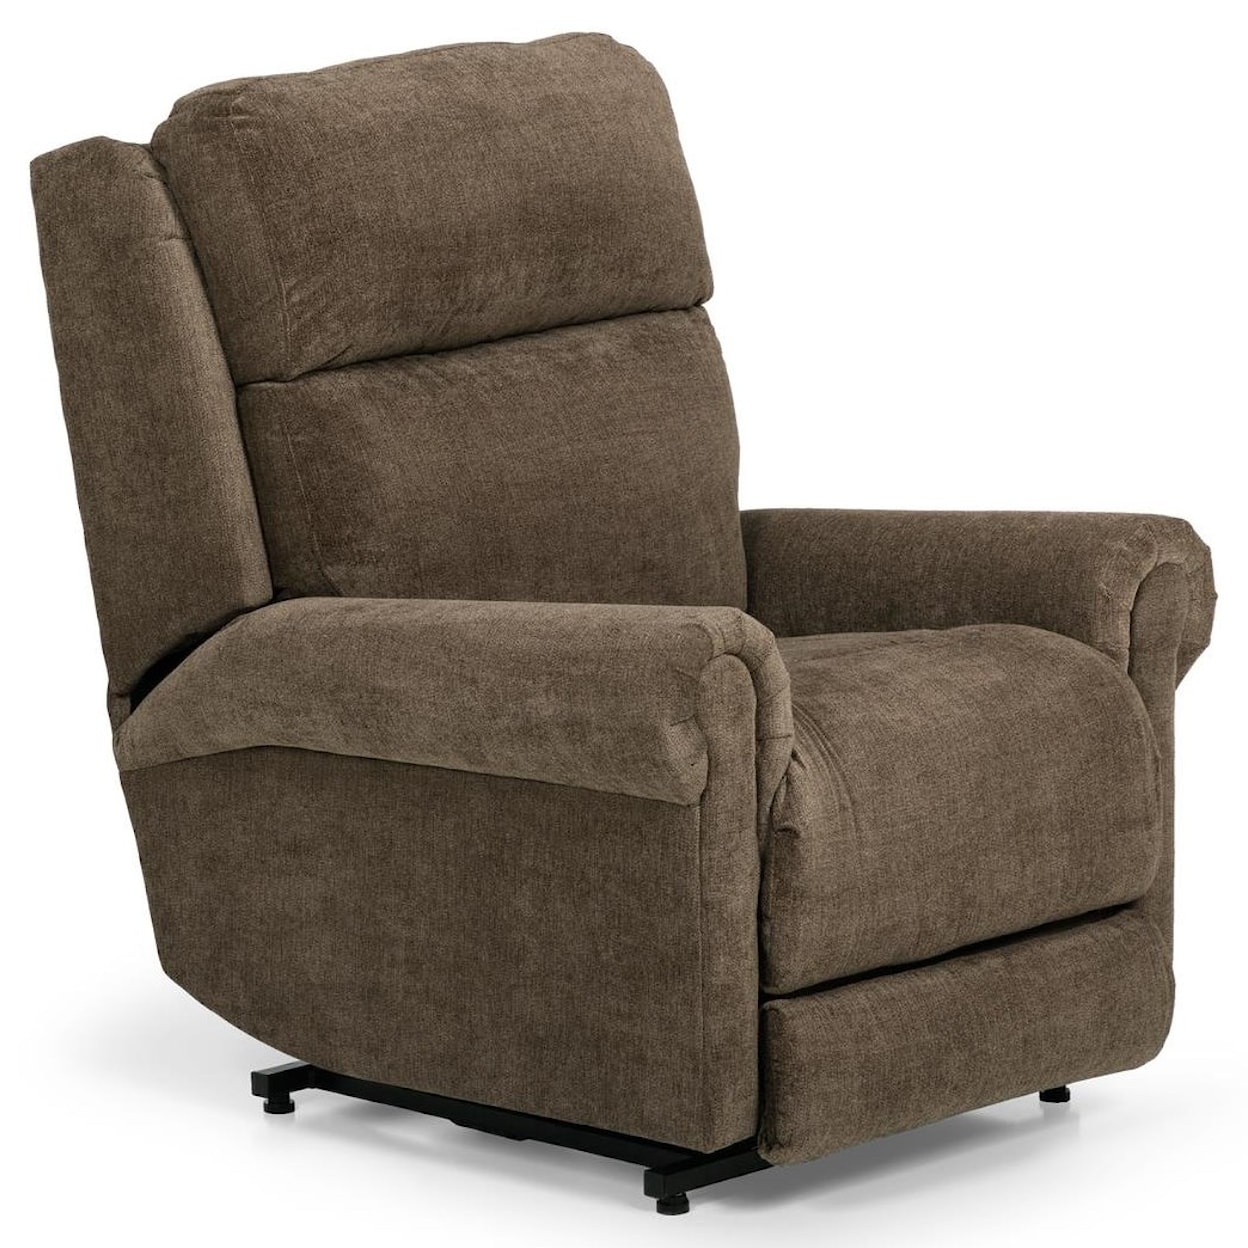 Stanton 875 Pwr HR/ Lumbar Lift Chair